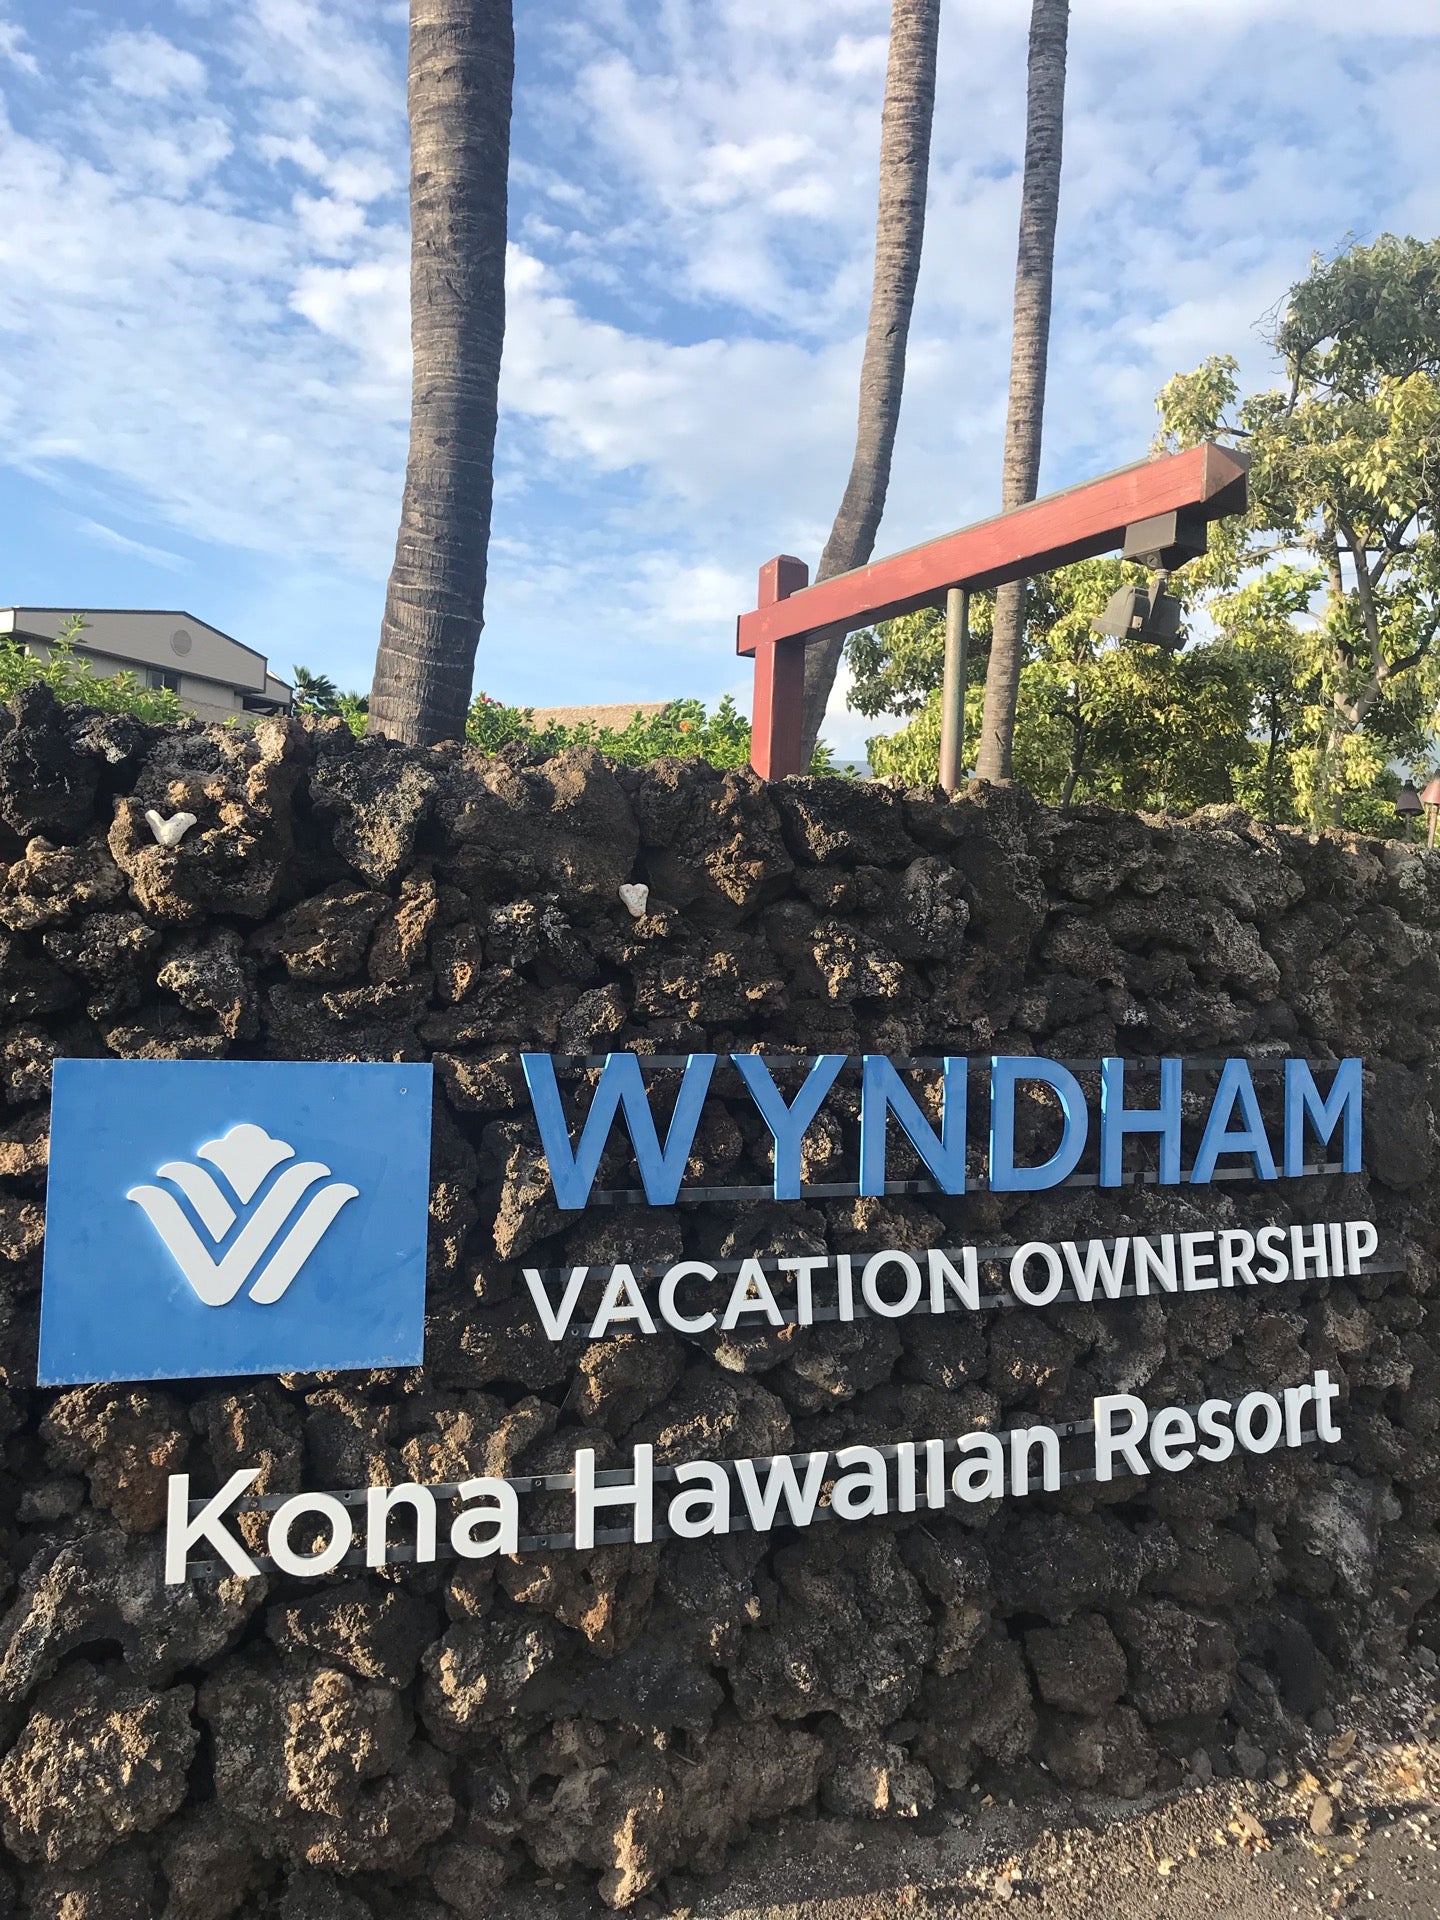 Club Wyndham Kona Hawaiian Resort Alii Dr Kailua Kona Hi